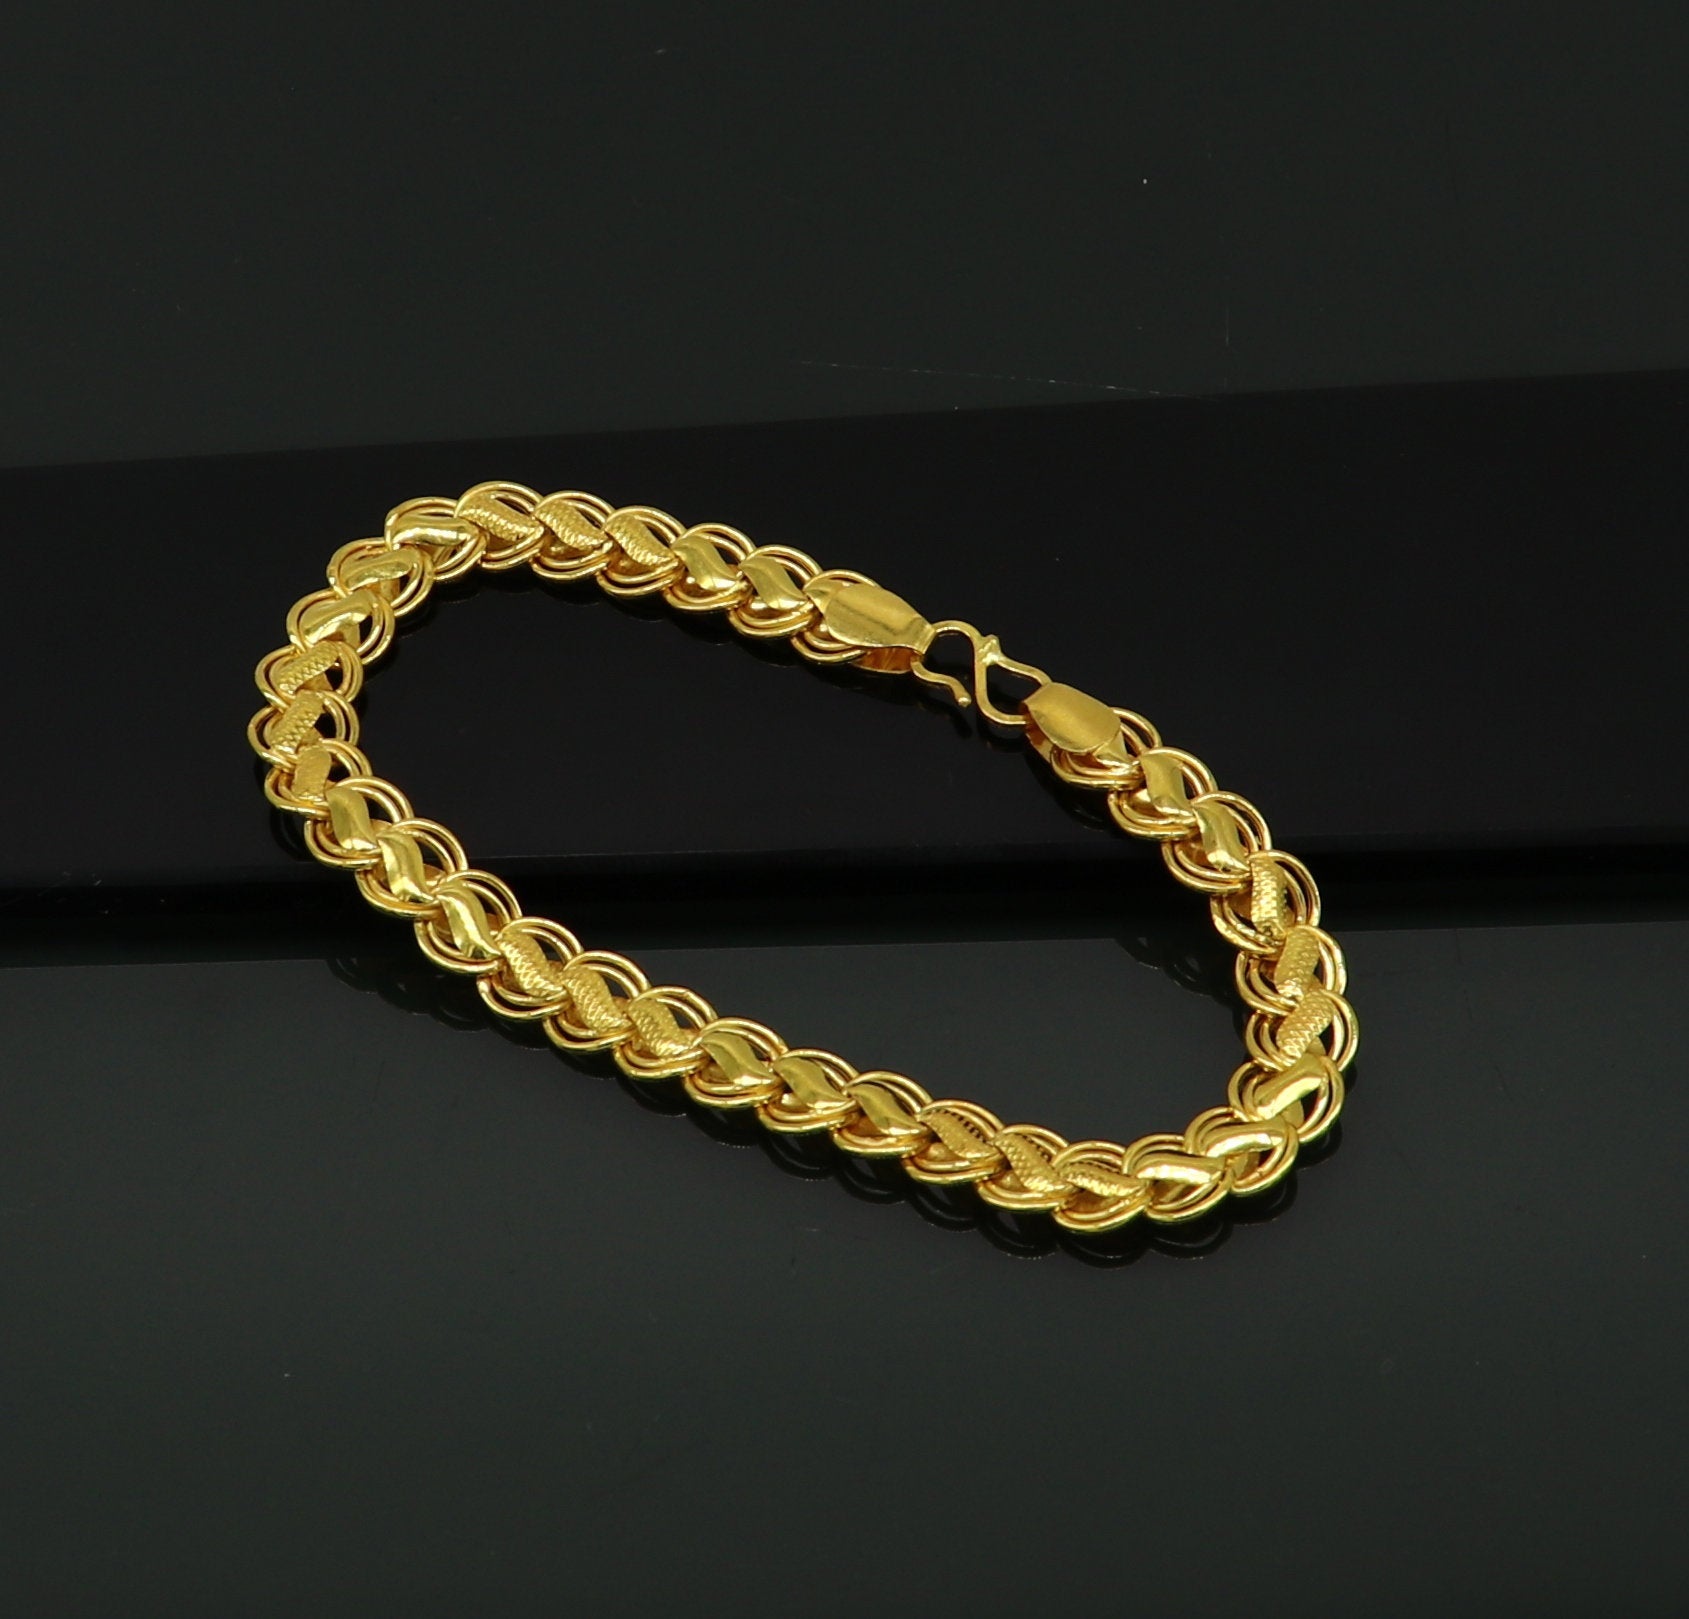 22kt yellow gold customized designer lotus bracelet, all sizes gifting bracelet, new fancy stylish bracelet unisex jewelry br50 - TRIBAL ORNAMENTS